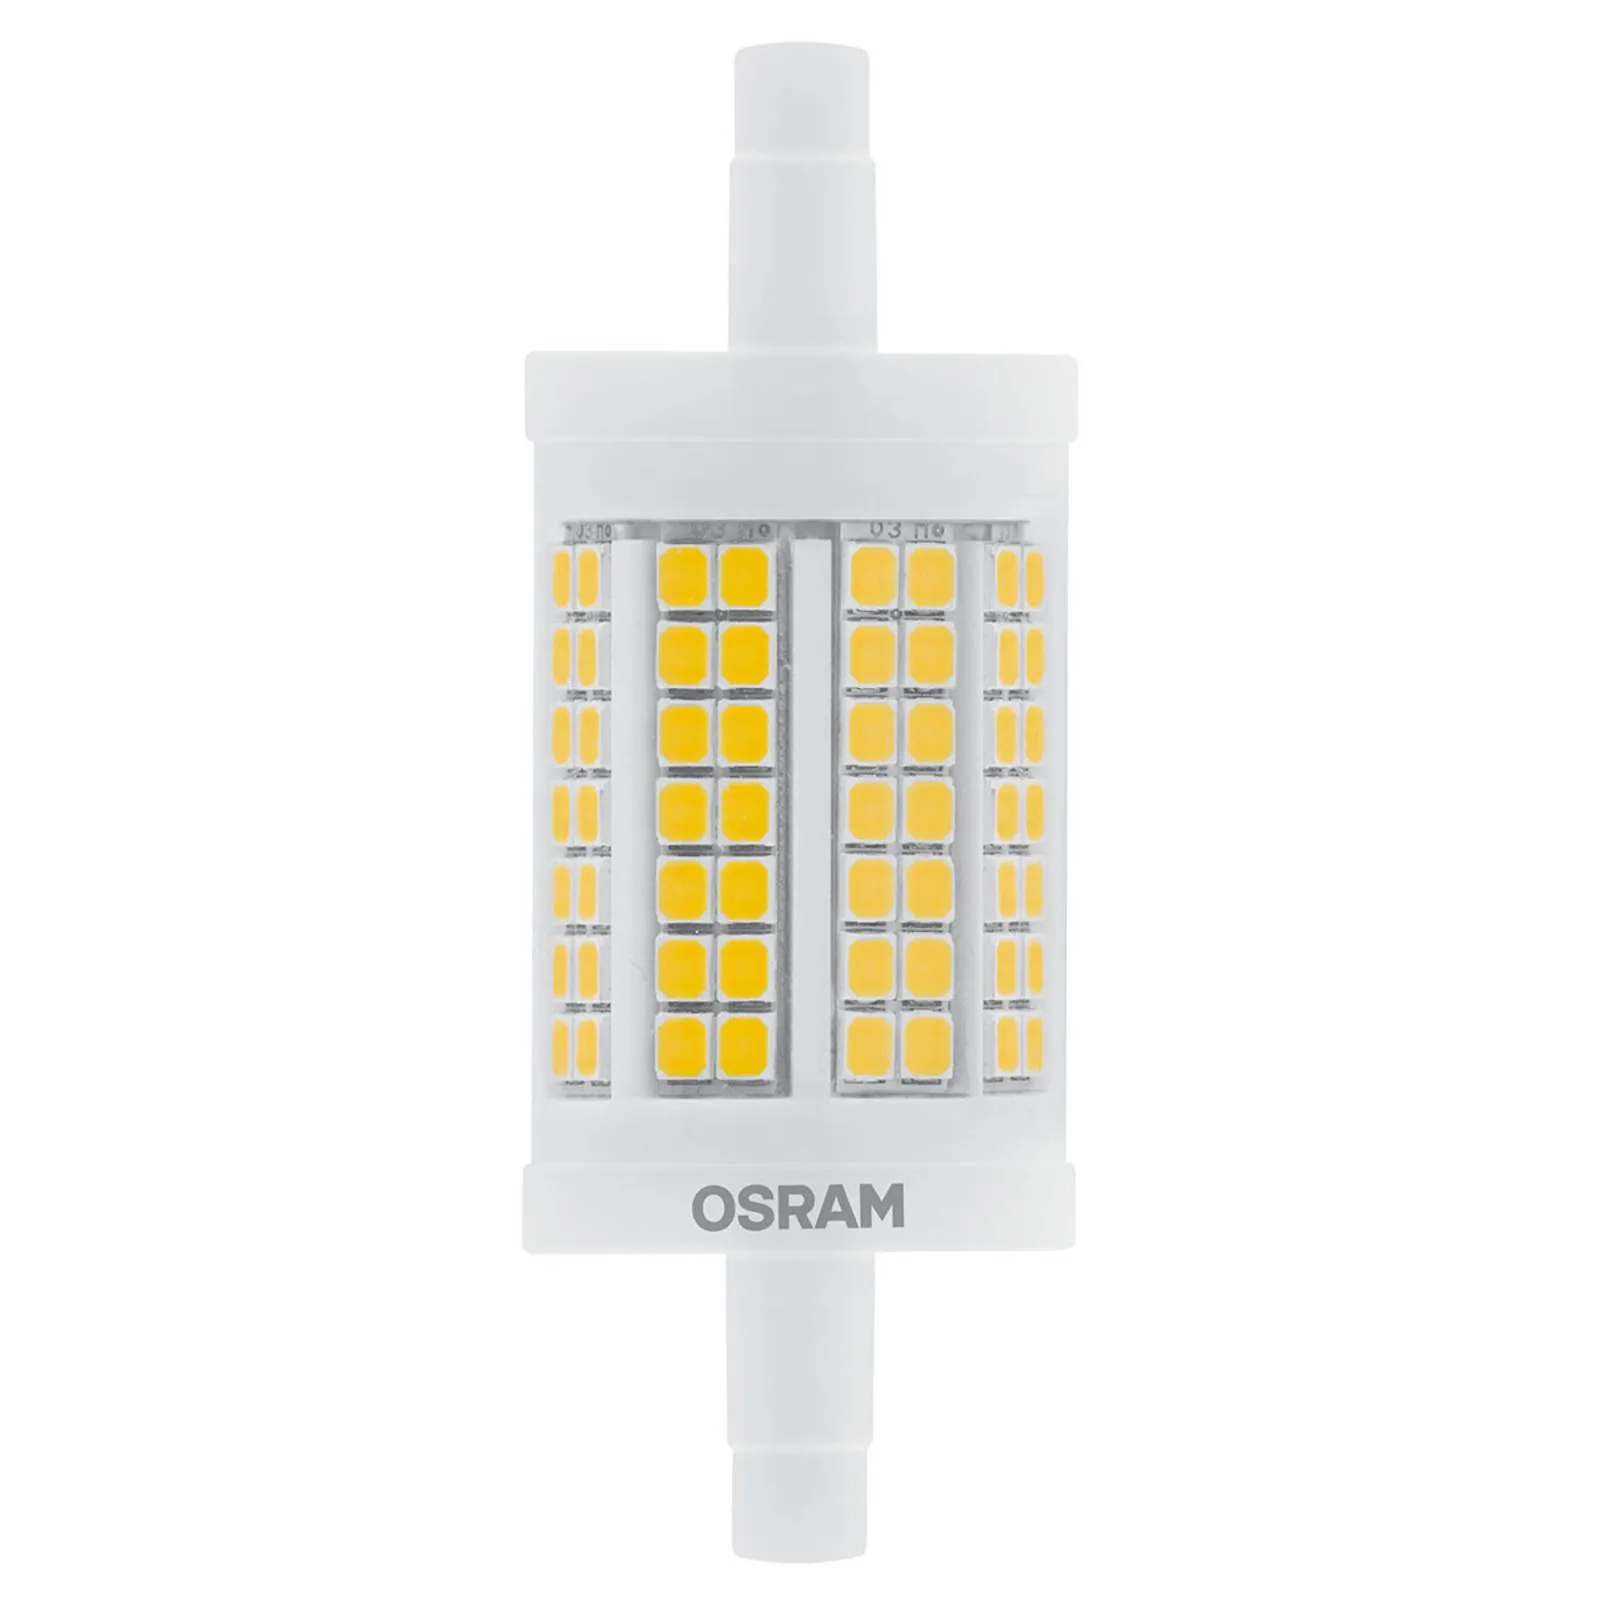 OSRAM LED tubolare R7s 12W bianco caldo 1.521 lm